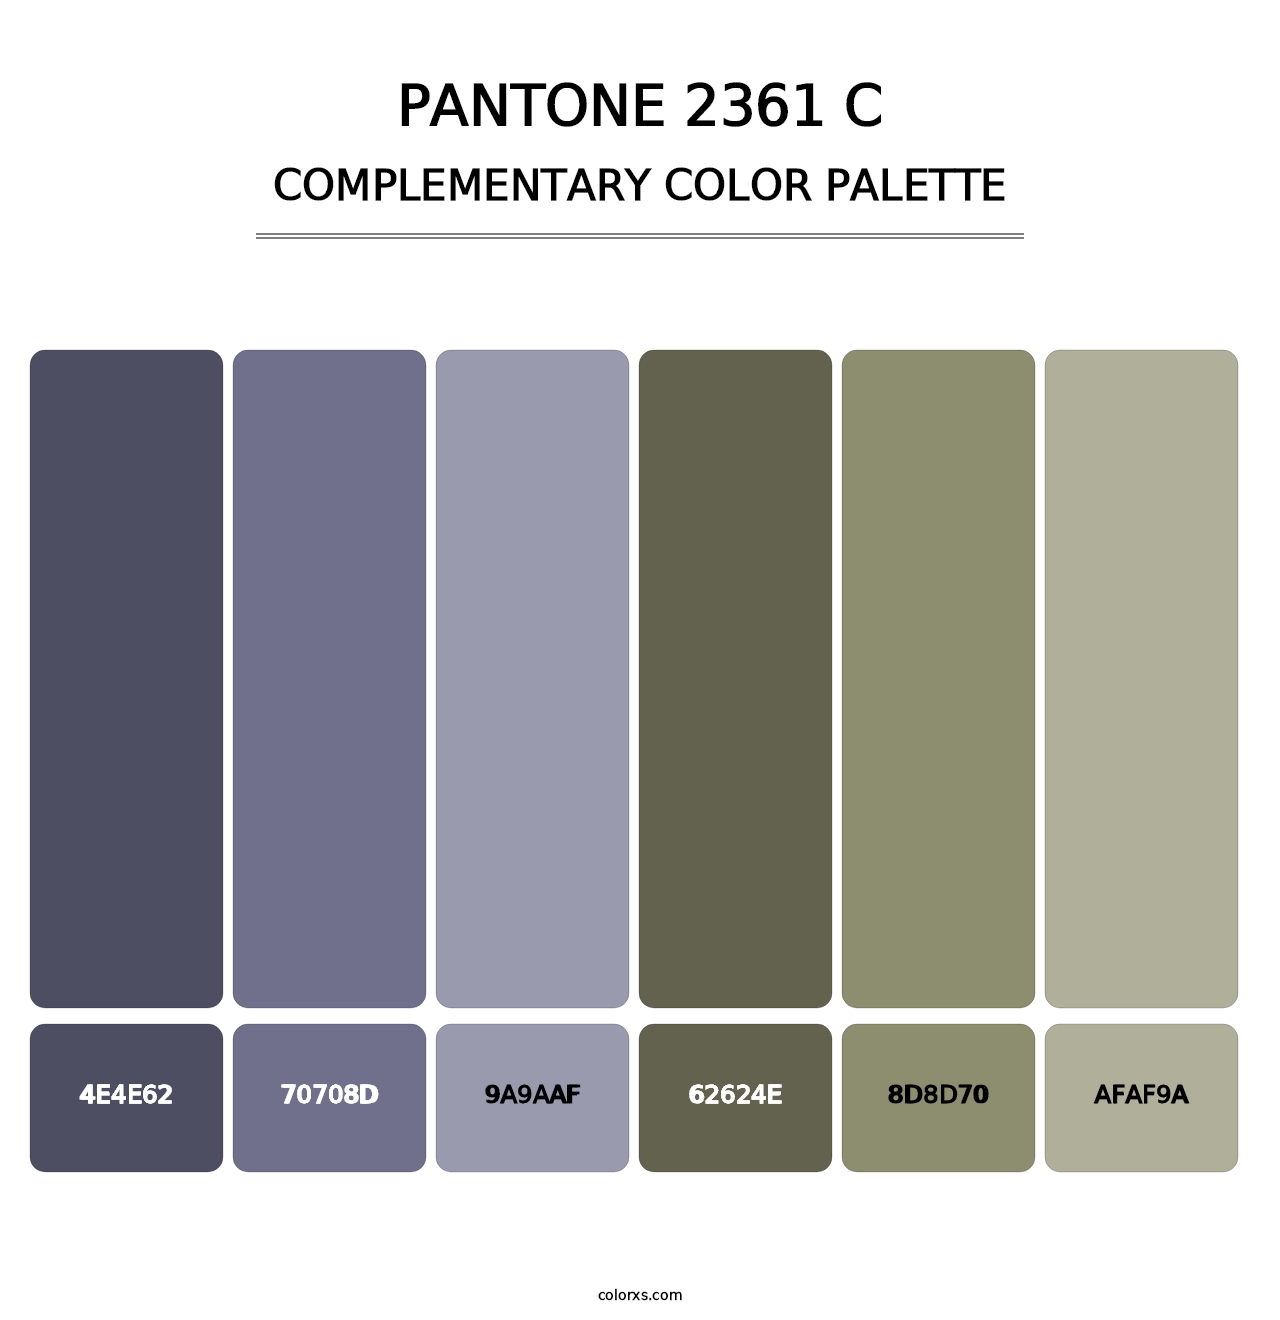 PANTONE 2361 C - Complementary Color Palette